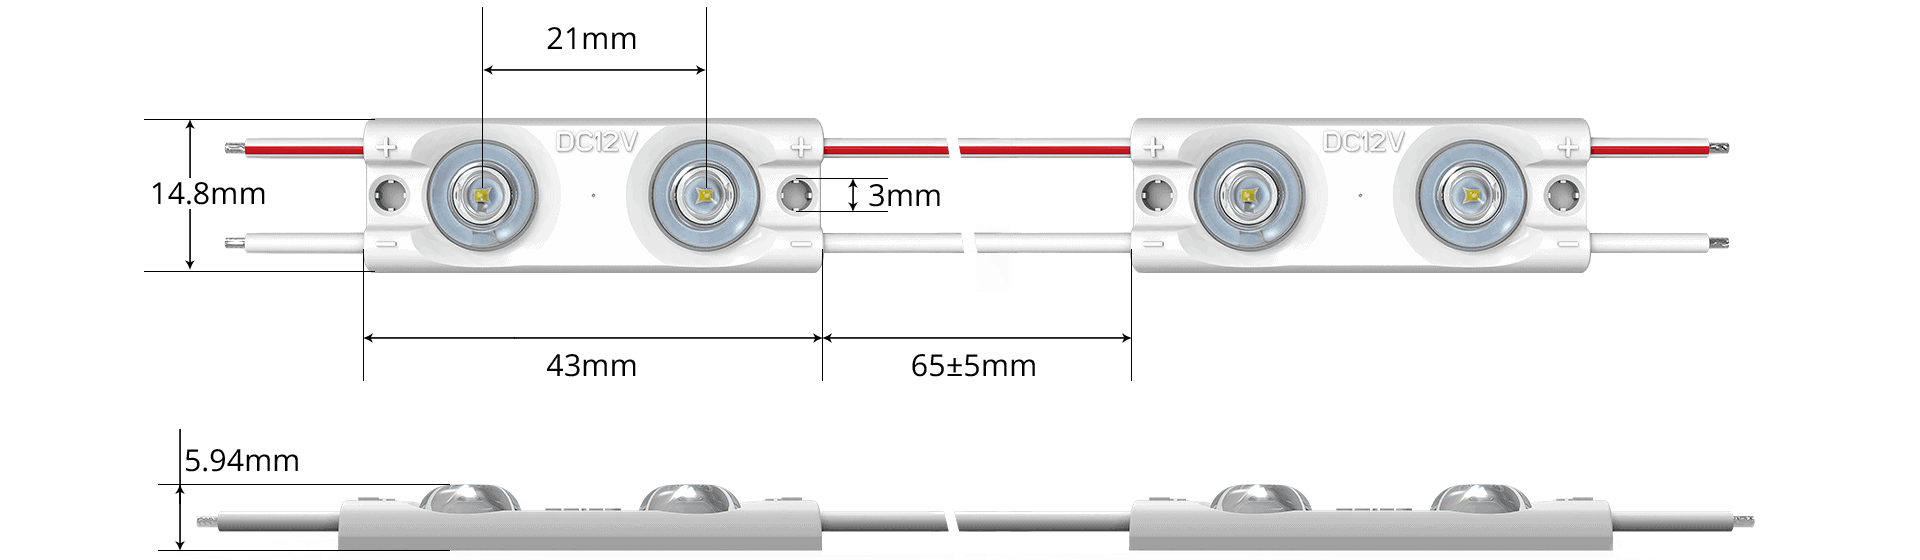 LED module_UTX357B_dimensions (1)